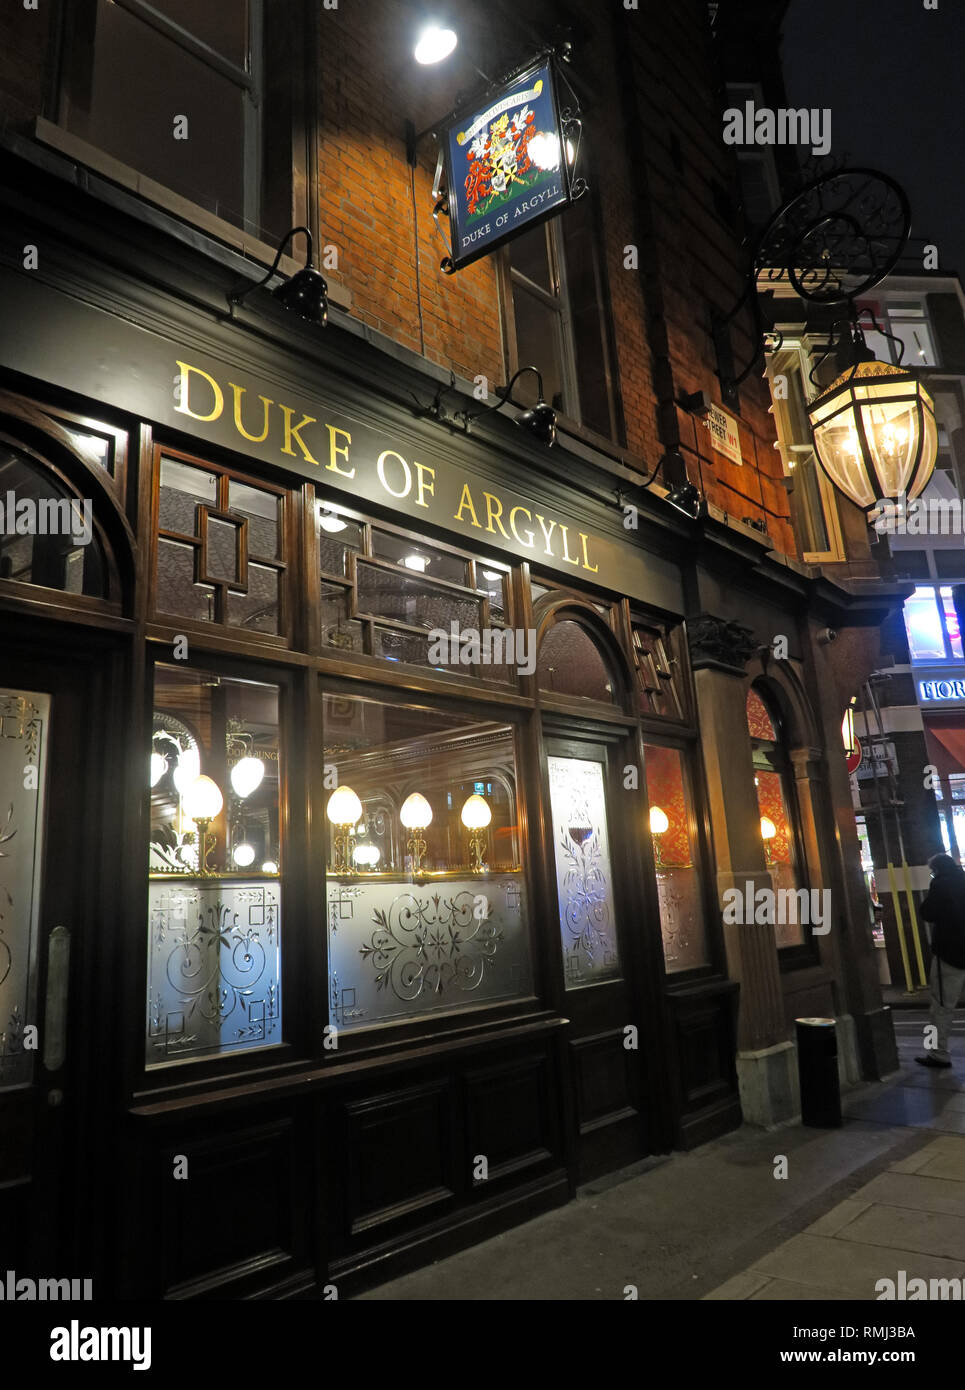 Duke of Argyll pub de nuit, 37 Brewer St, Soho, Londres, Angleterre, ROYAUME-UNI, W1F 0RY Banque D'Images